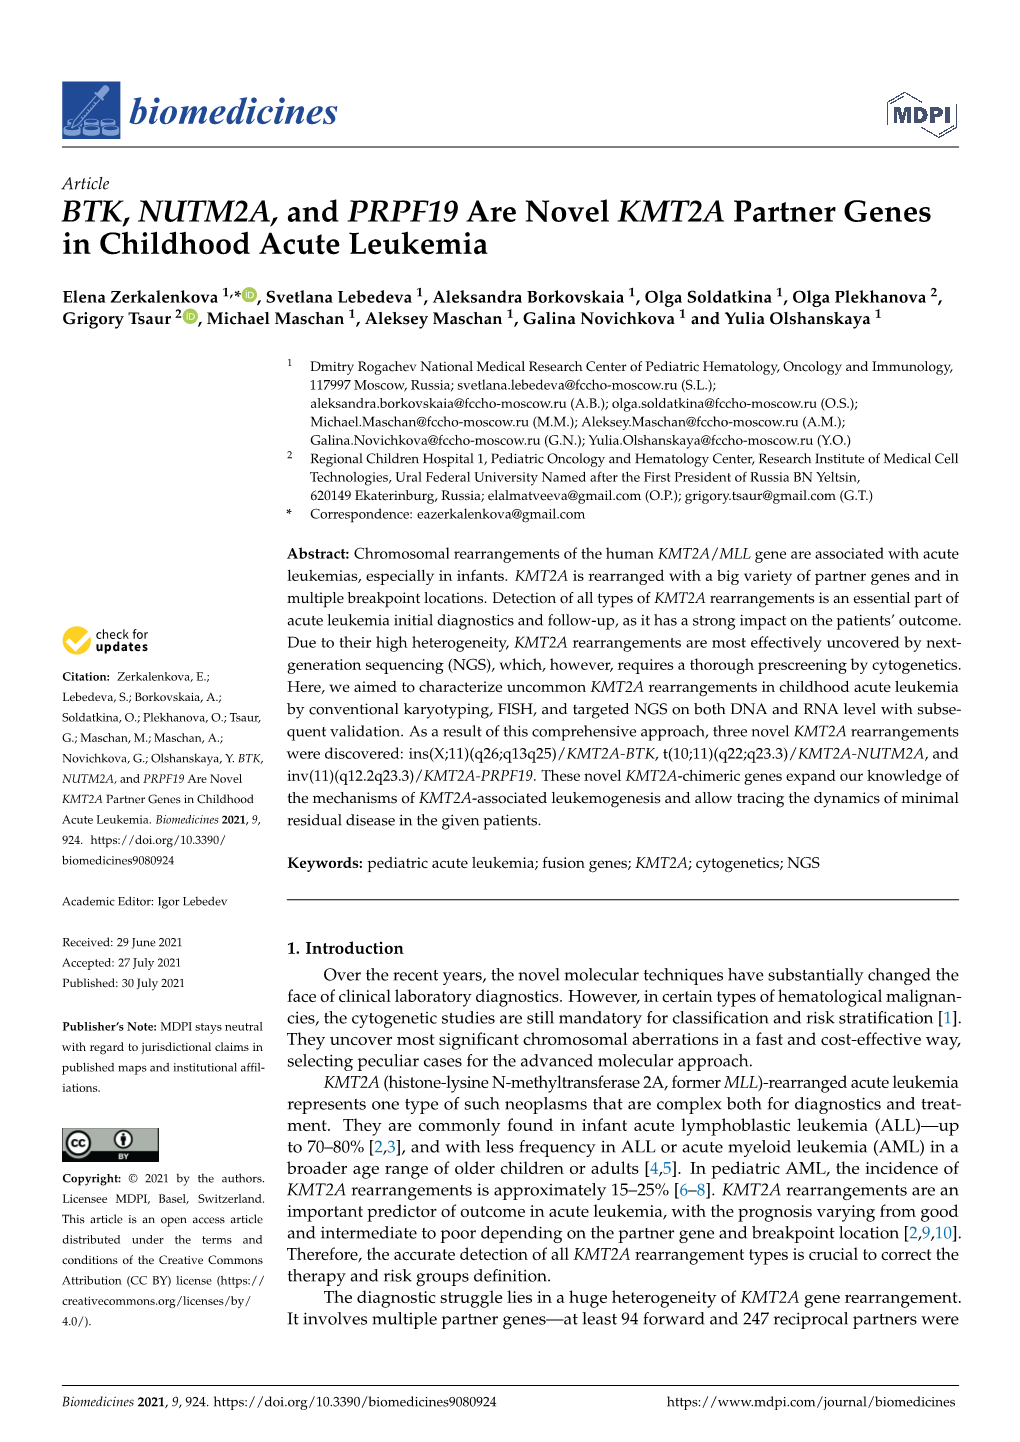 BTK, NUTM2A, and PRPF19 Are Novel KMT2A Partner Genes in Childhood Acute Leukemia